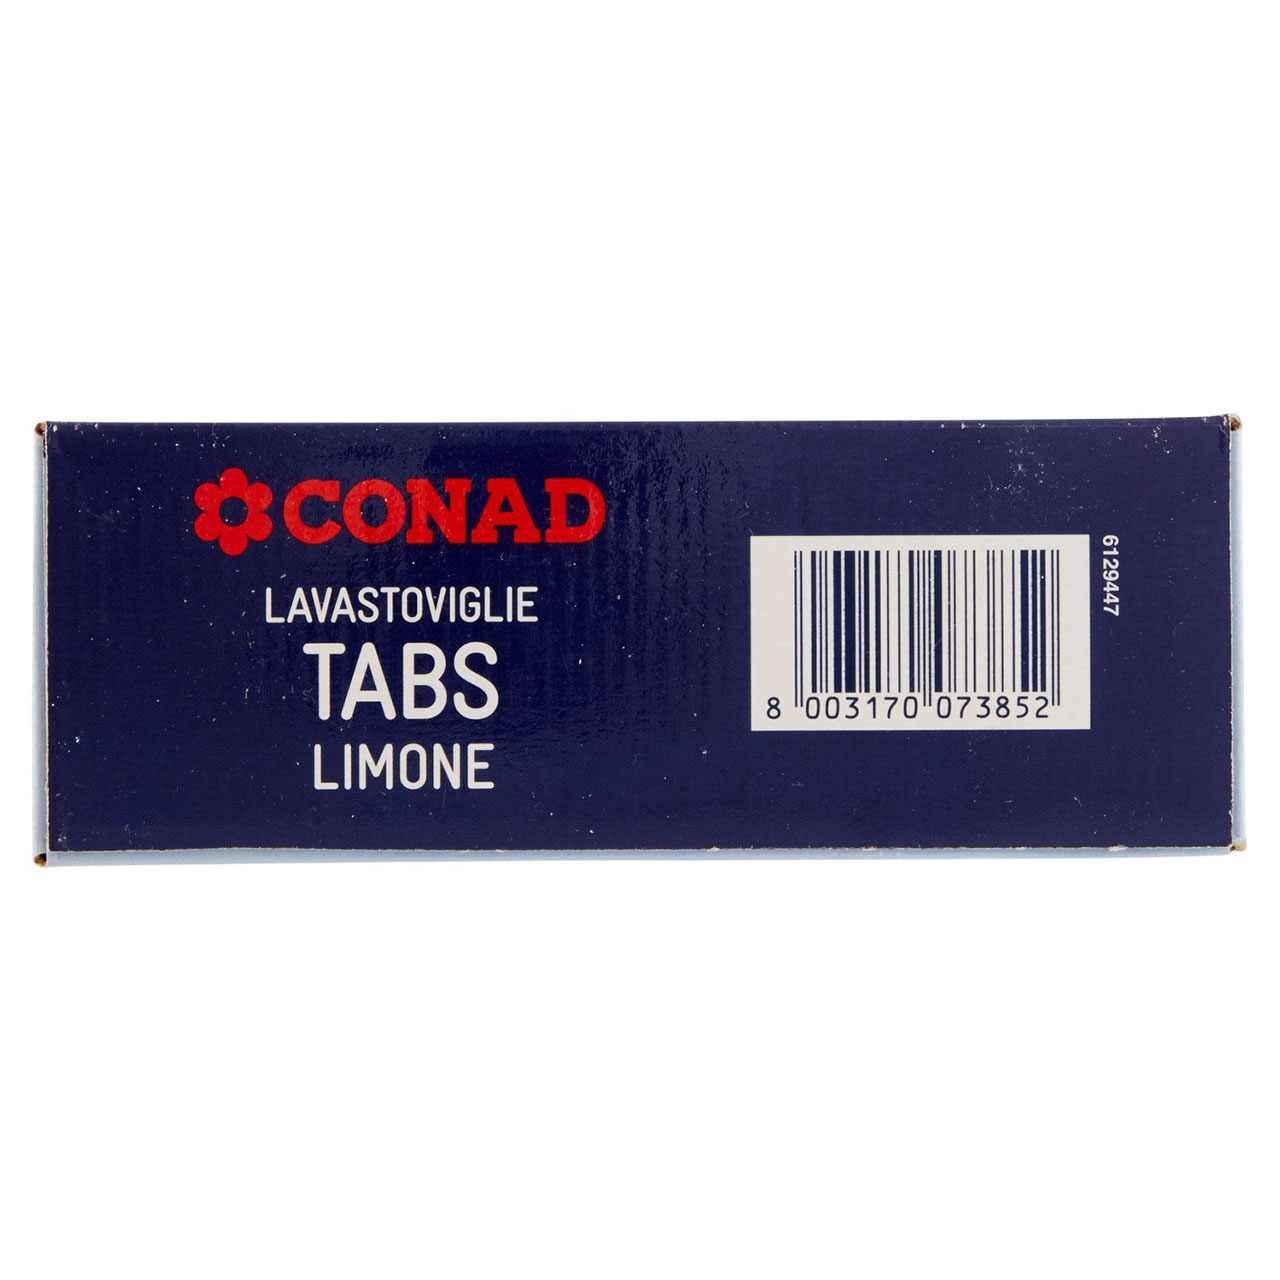 Lavastoviglie Limone 40 Tabs 720 g Conad online